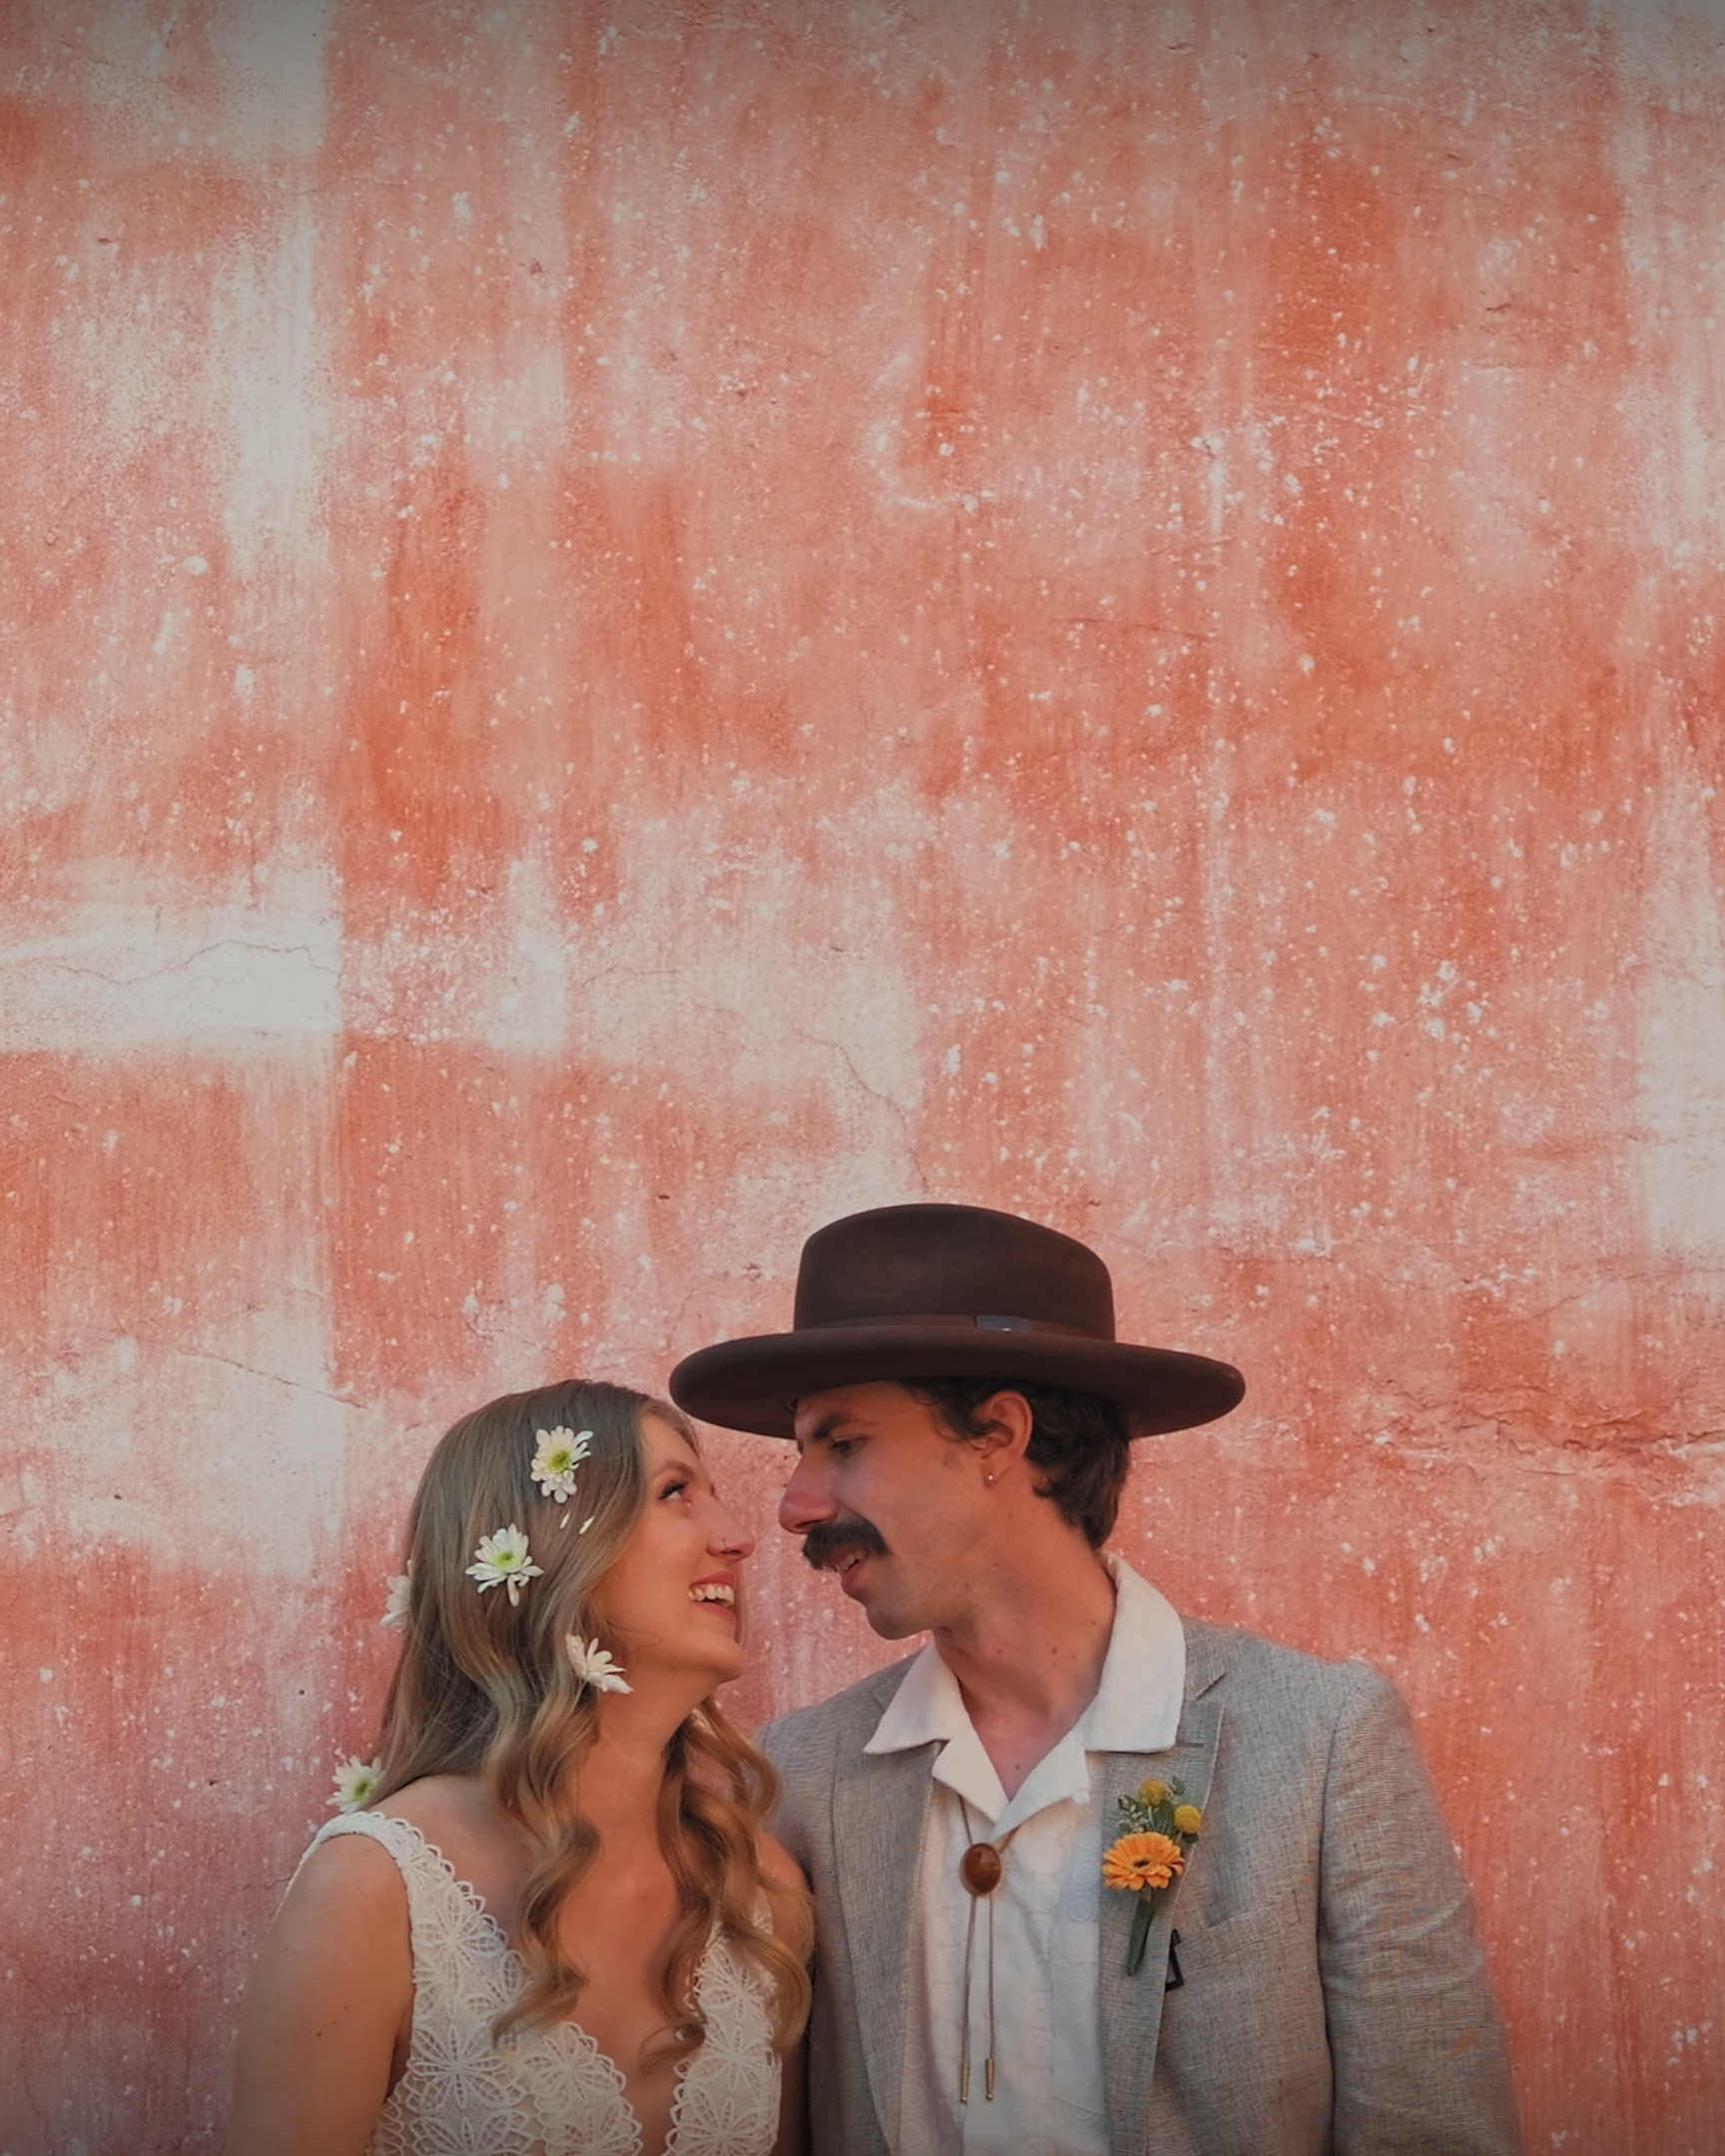 Oliver & Rachel Wedding Video at Quinta Real Oaxaca Mexico